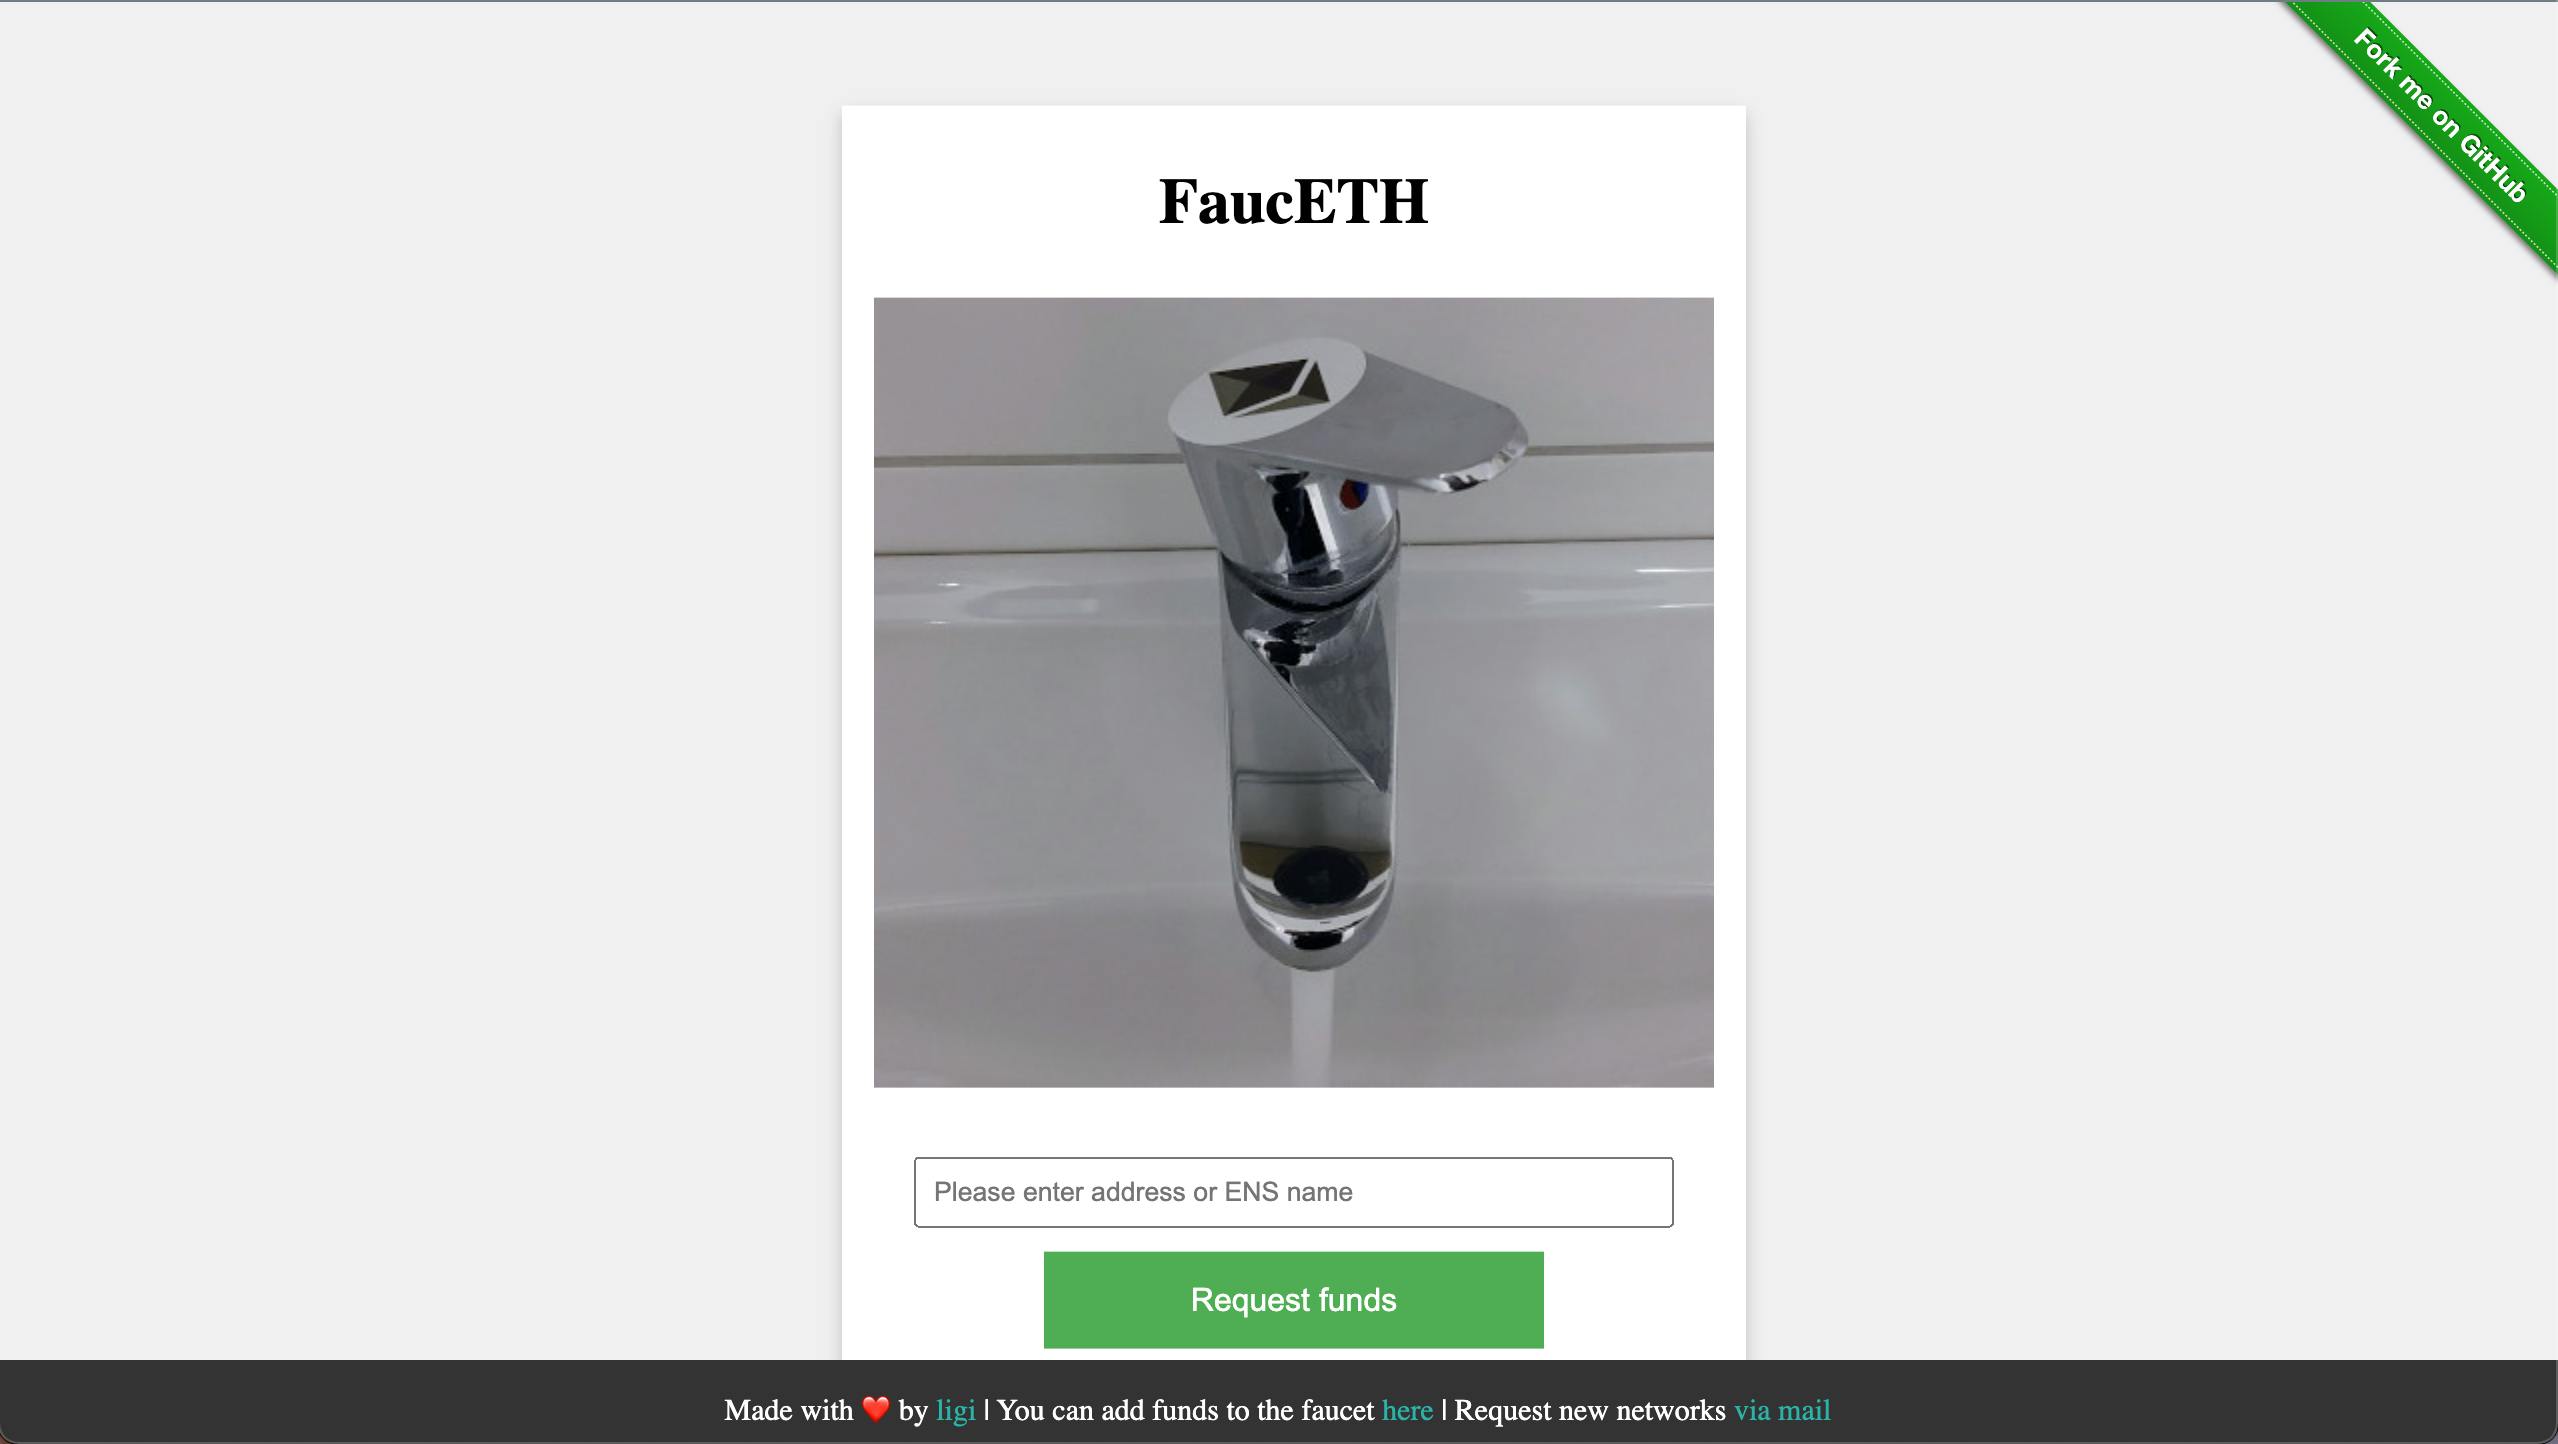 Komputing faucet is a place to get a free Testnet token for Ethereum dApp development